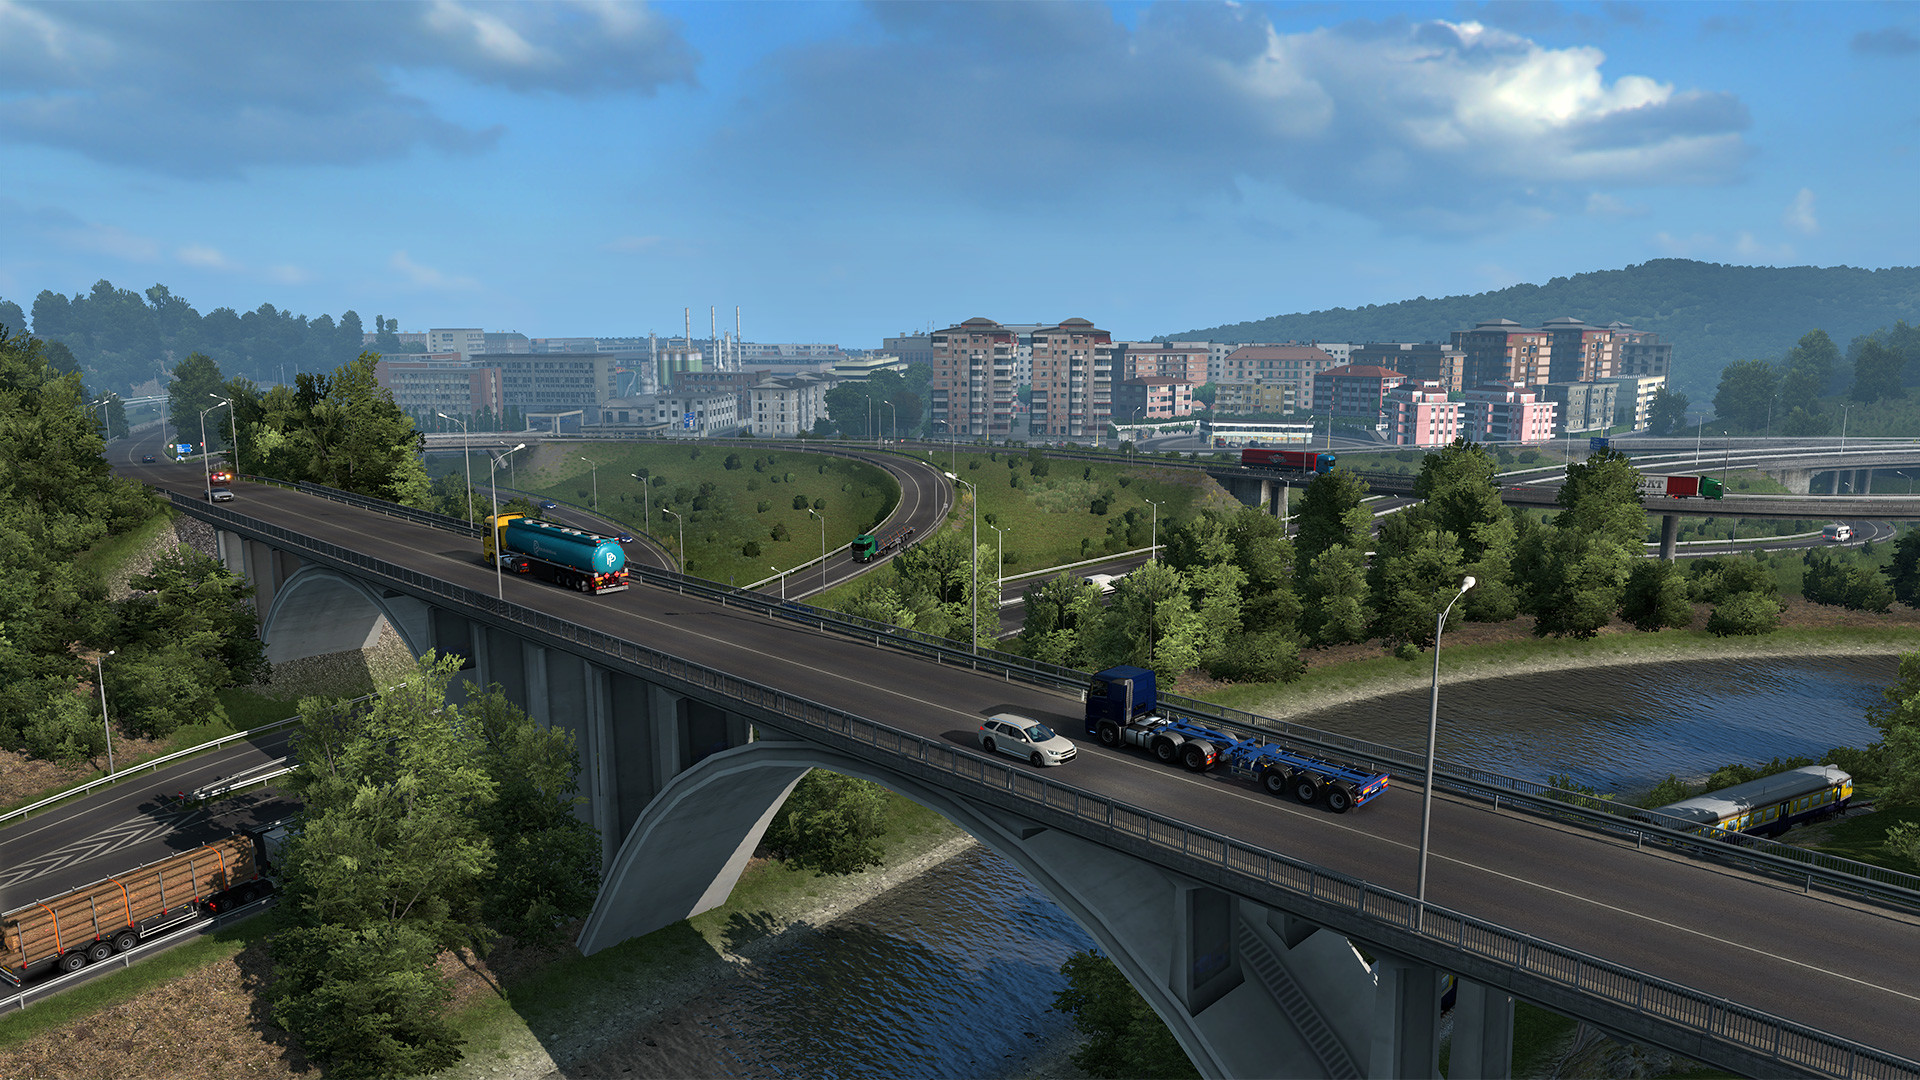 Euro Truck Simulator 2 - Road to the Black Sea Steam RU